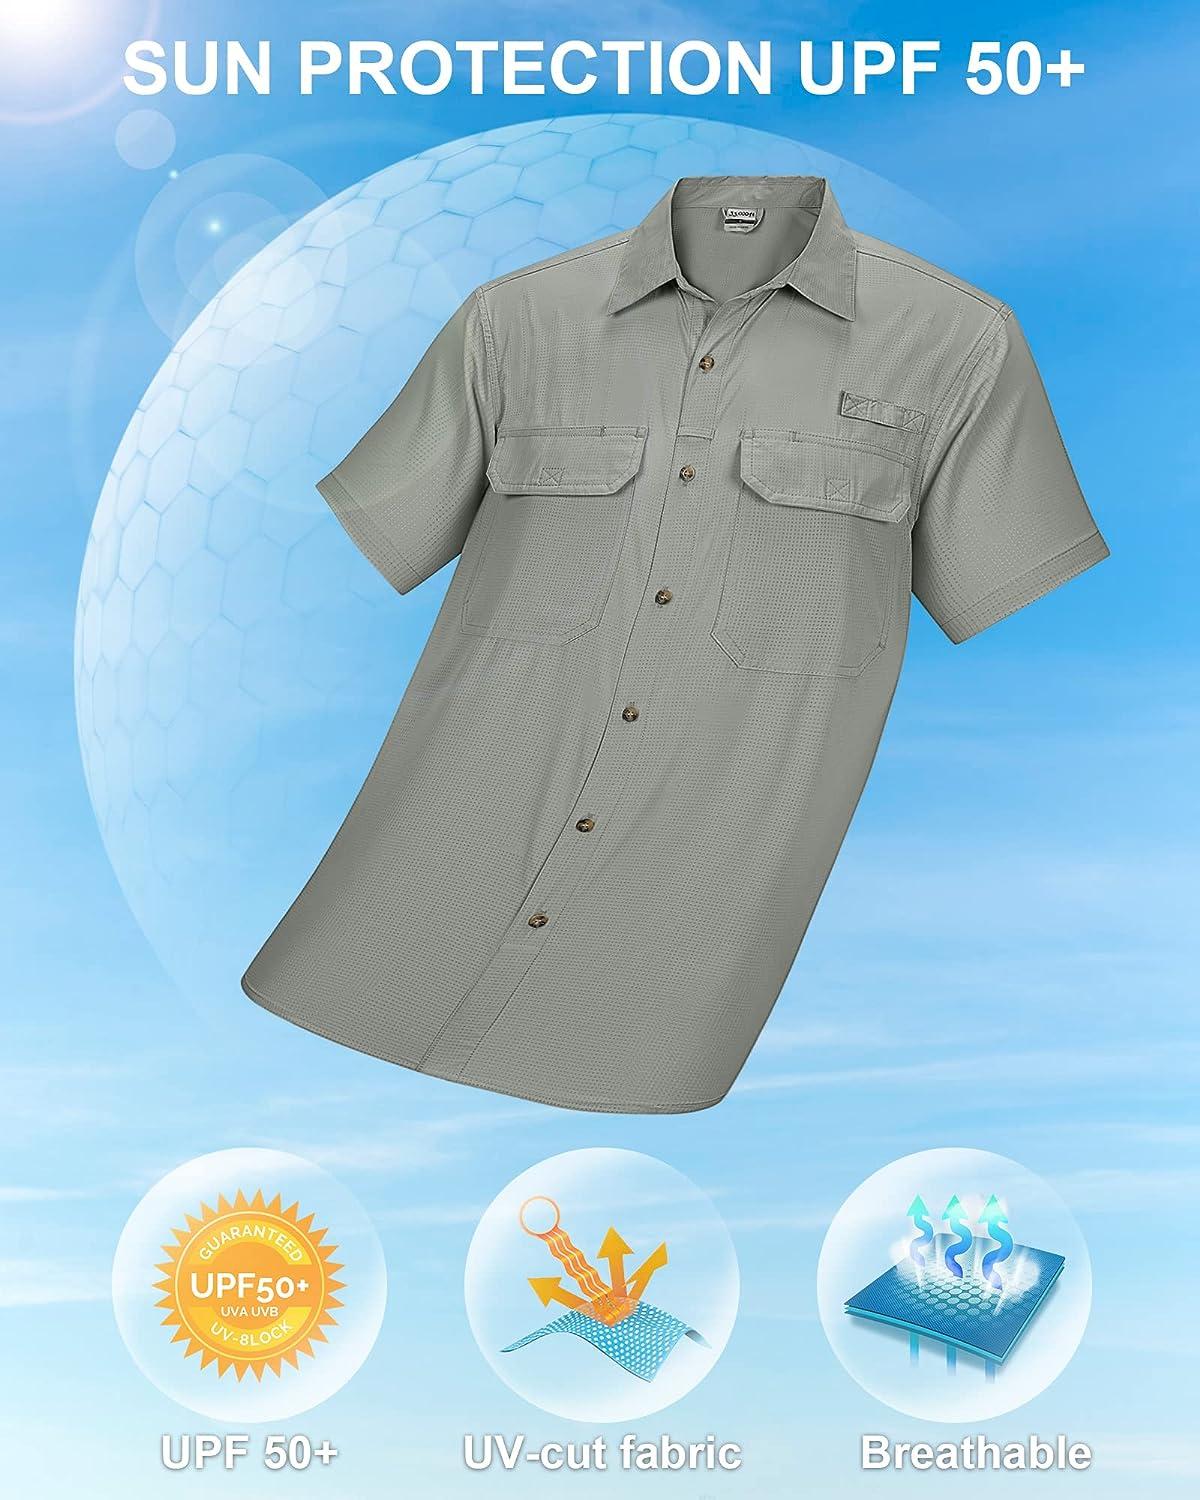 PEASKJP Men's Short-Sleeve T-Shirt UPF 50+ UV Quick Dry Cooling Fishing  Shirts for Travel Camping Hiking White Large,Blue M